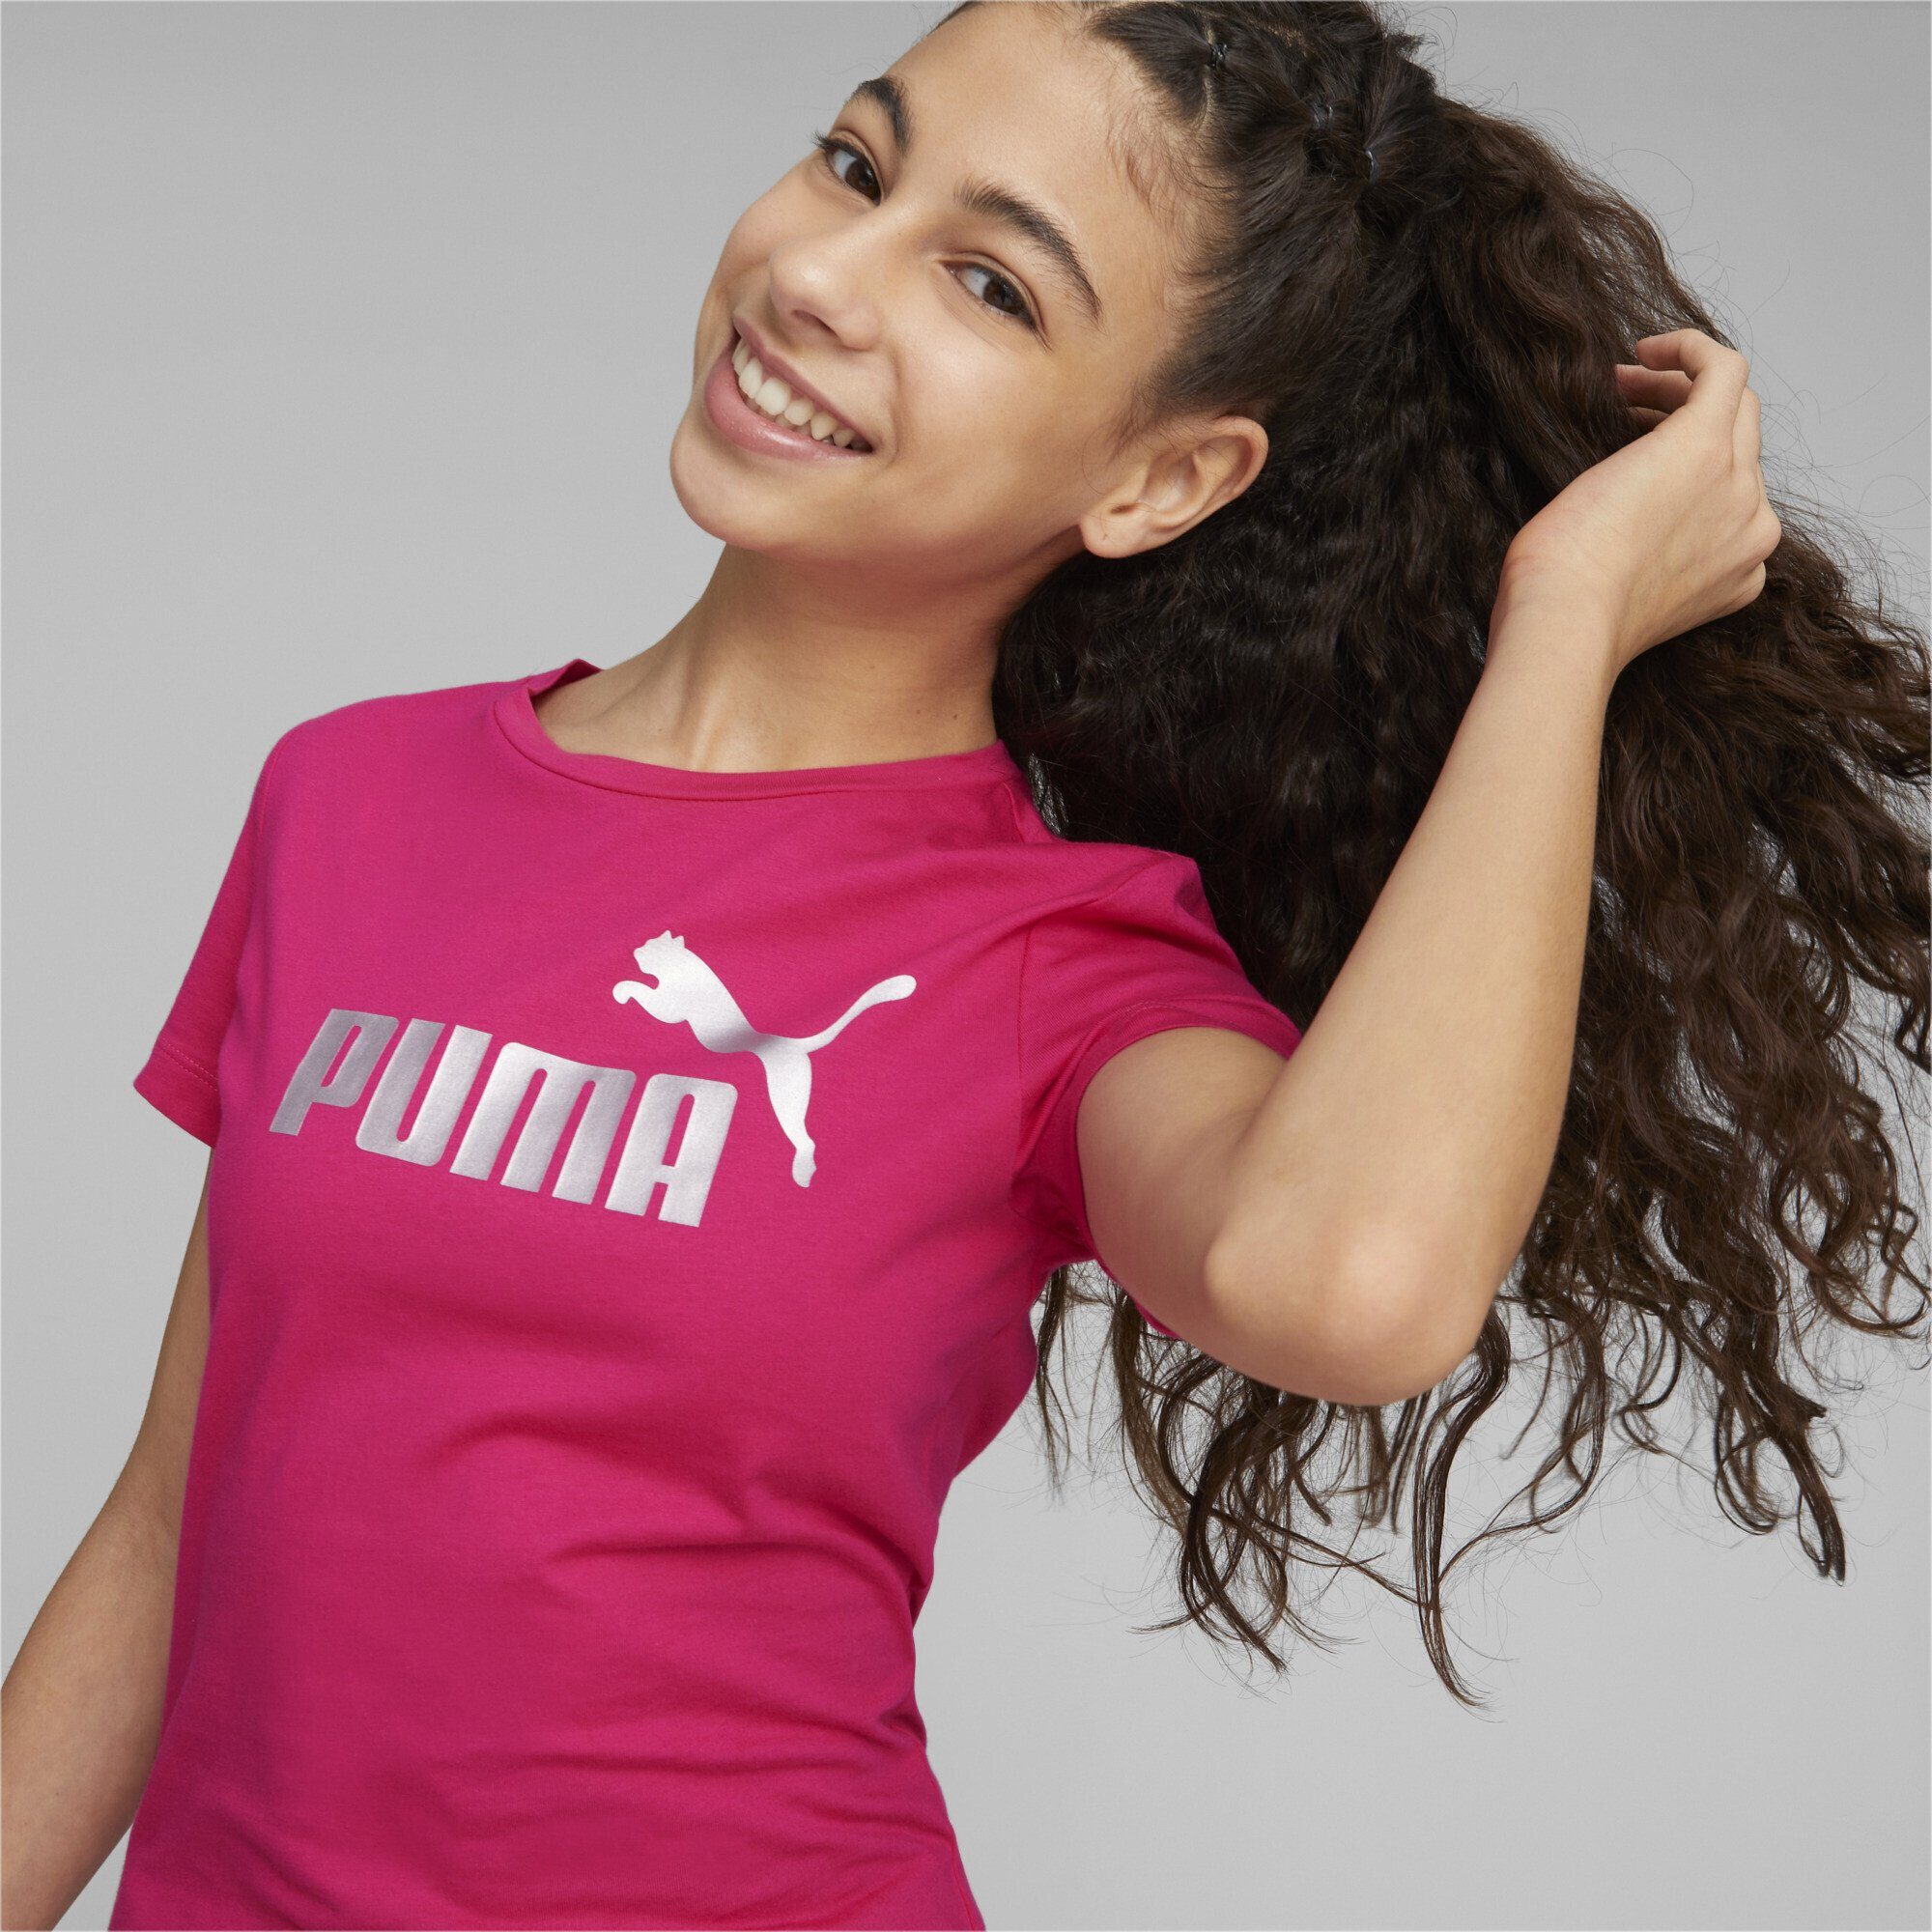 PUMA T-Shirt T-Shirt Essentials+ Orchid Shadow Logo Pink Mädchen